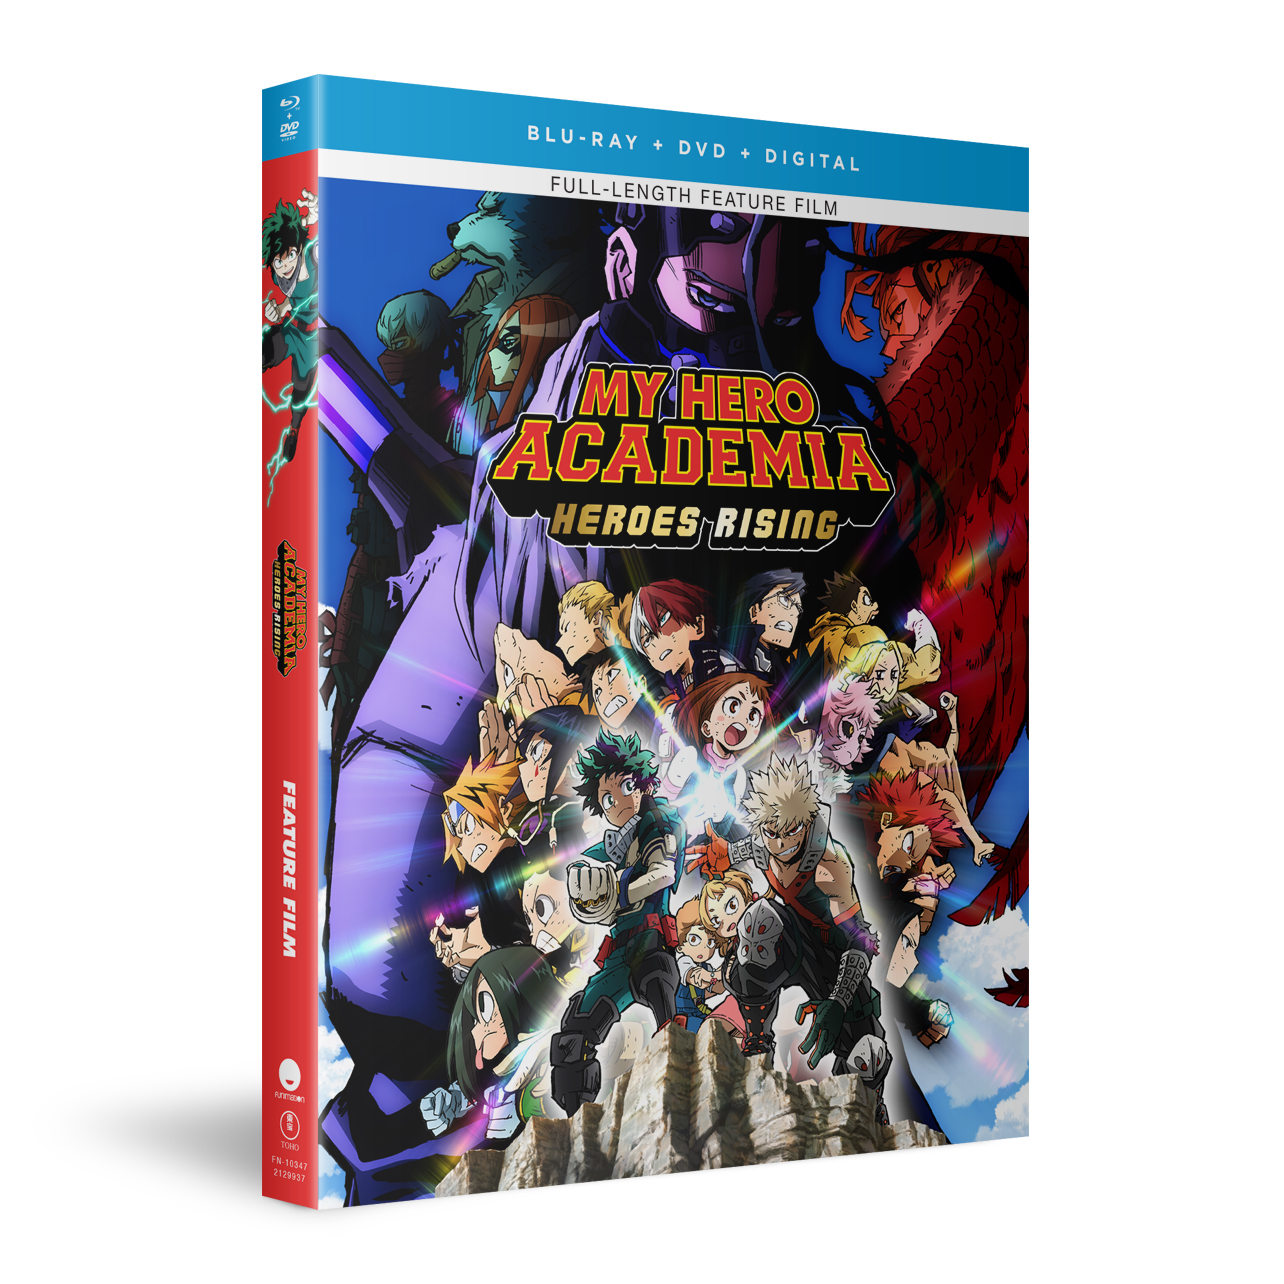 My Hero Academia: Heroes Rising - Blu-ray + DVD image count 2